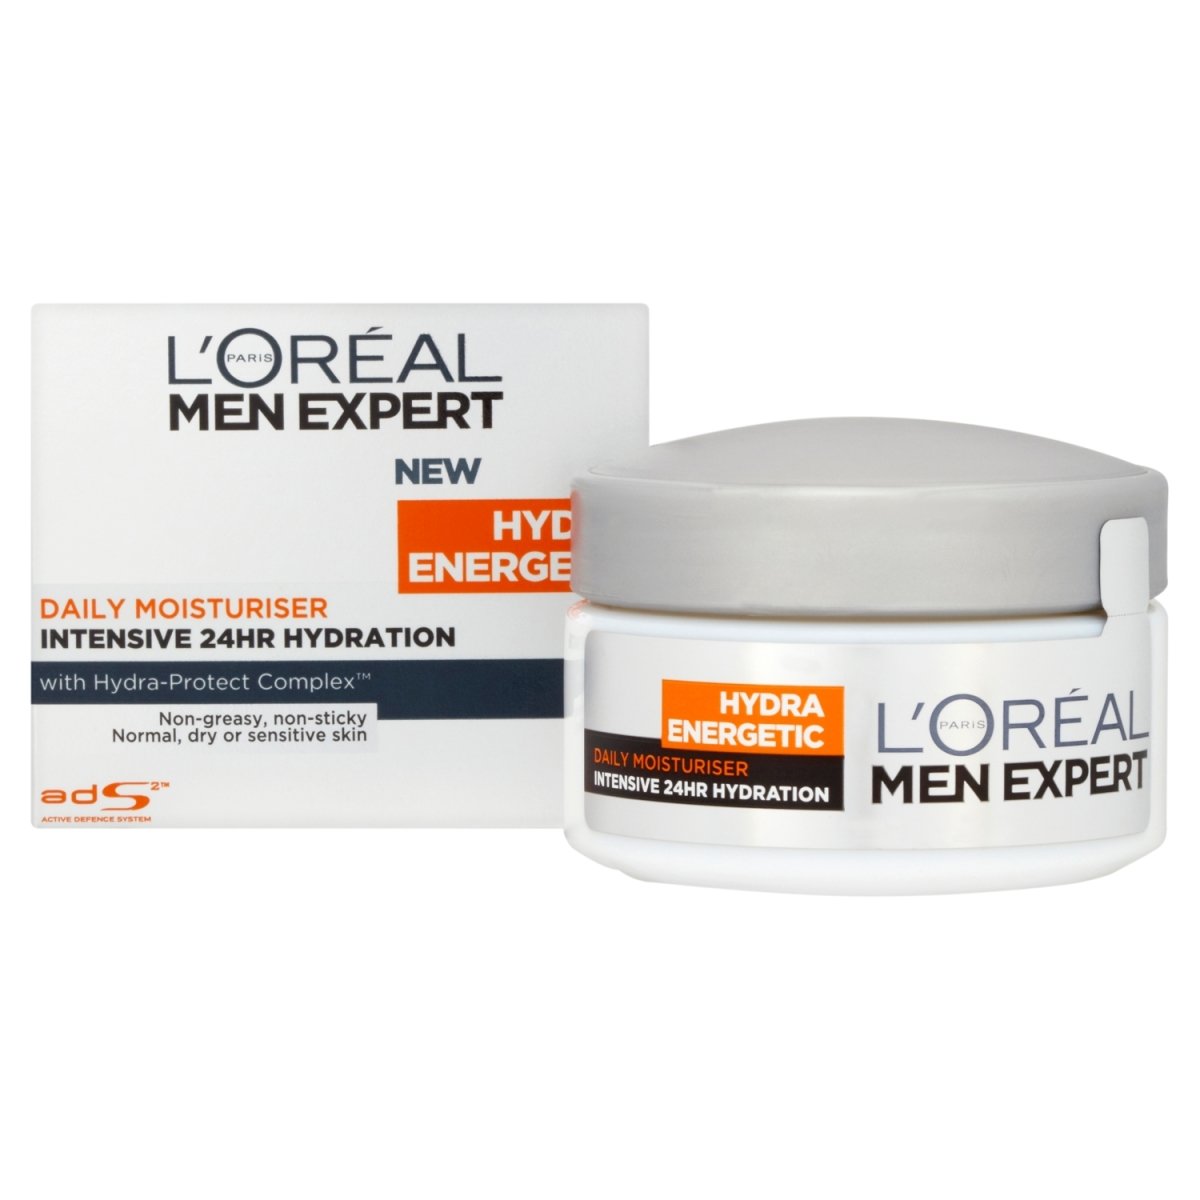 L'Oreal Men Expert Hydra Energy Daily Moisturiser Pot - Intamarque 3600522233077